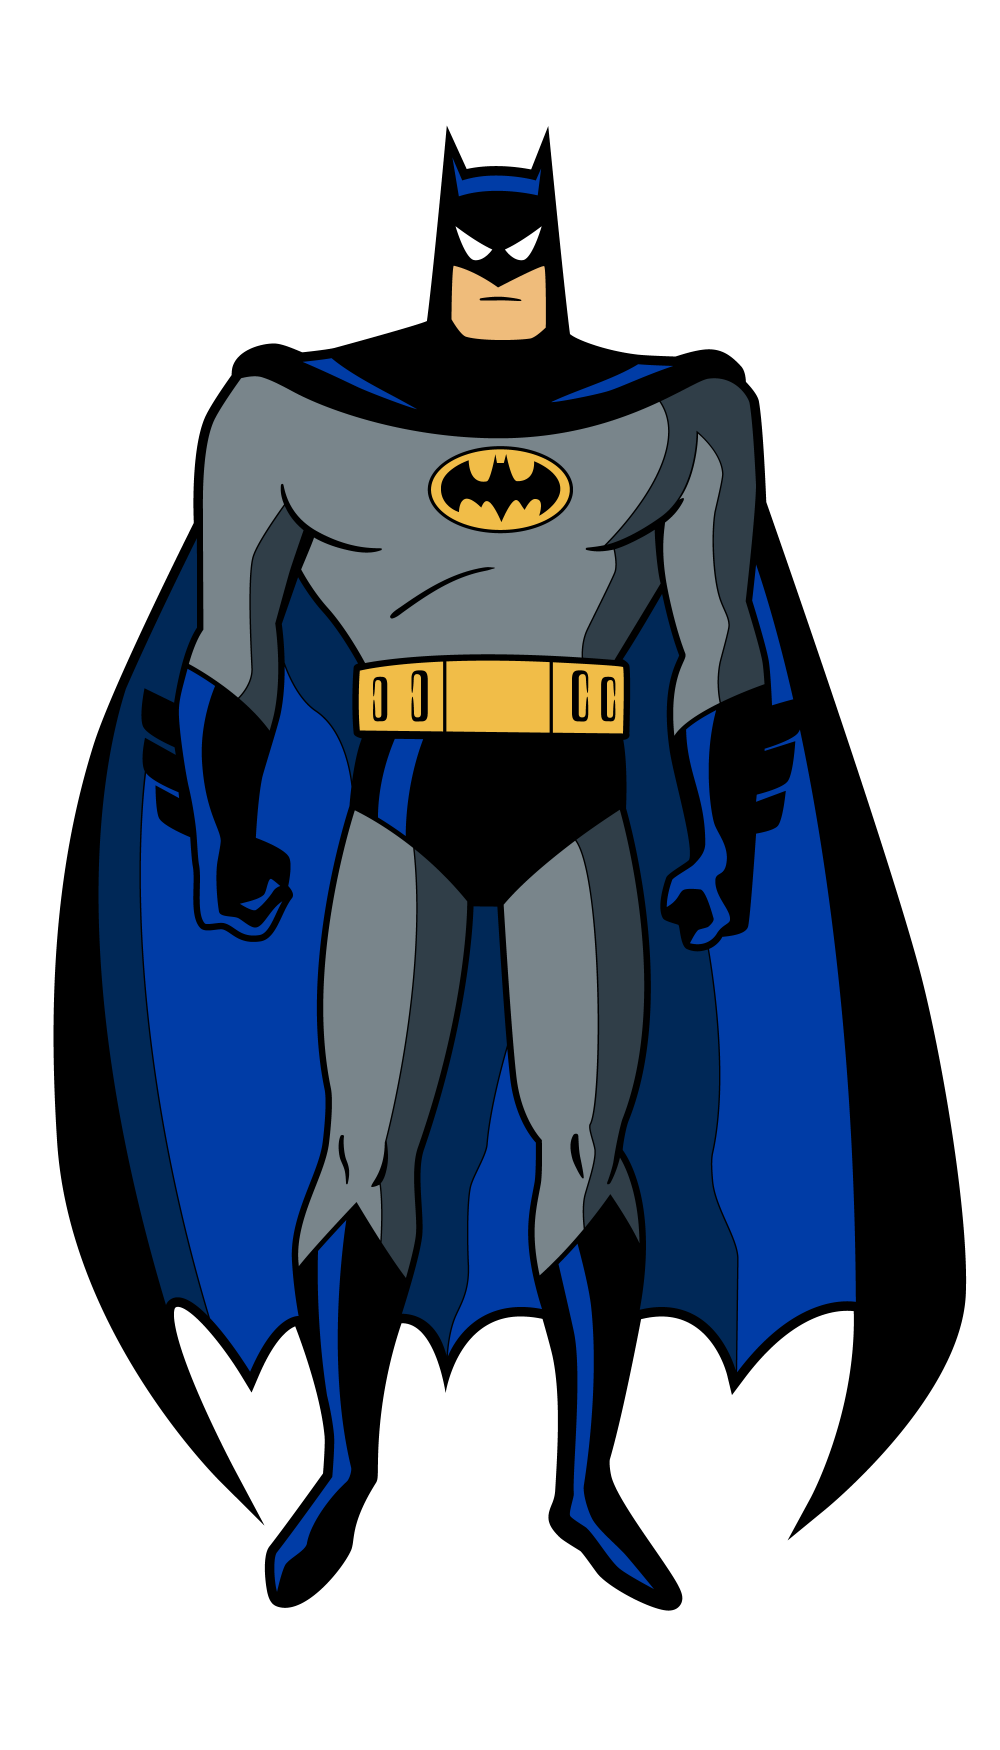 Batman The Animated Series Figpin Batman 475 Hatcher S Collectibles